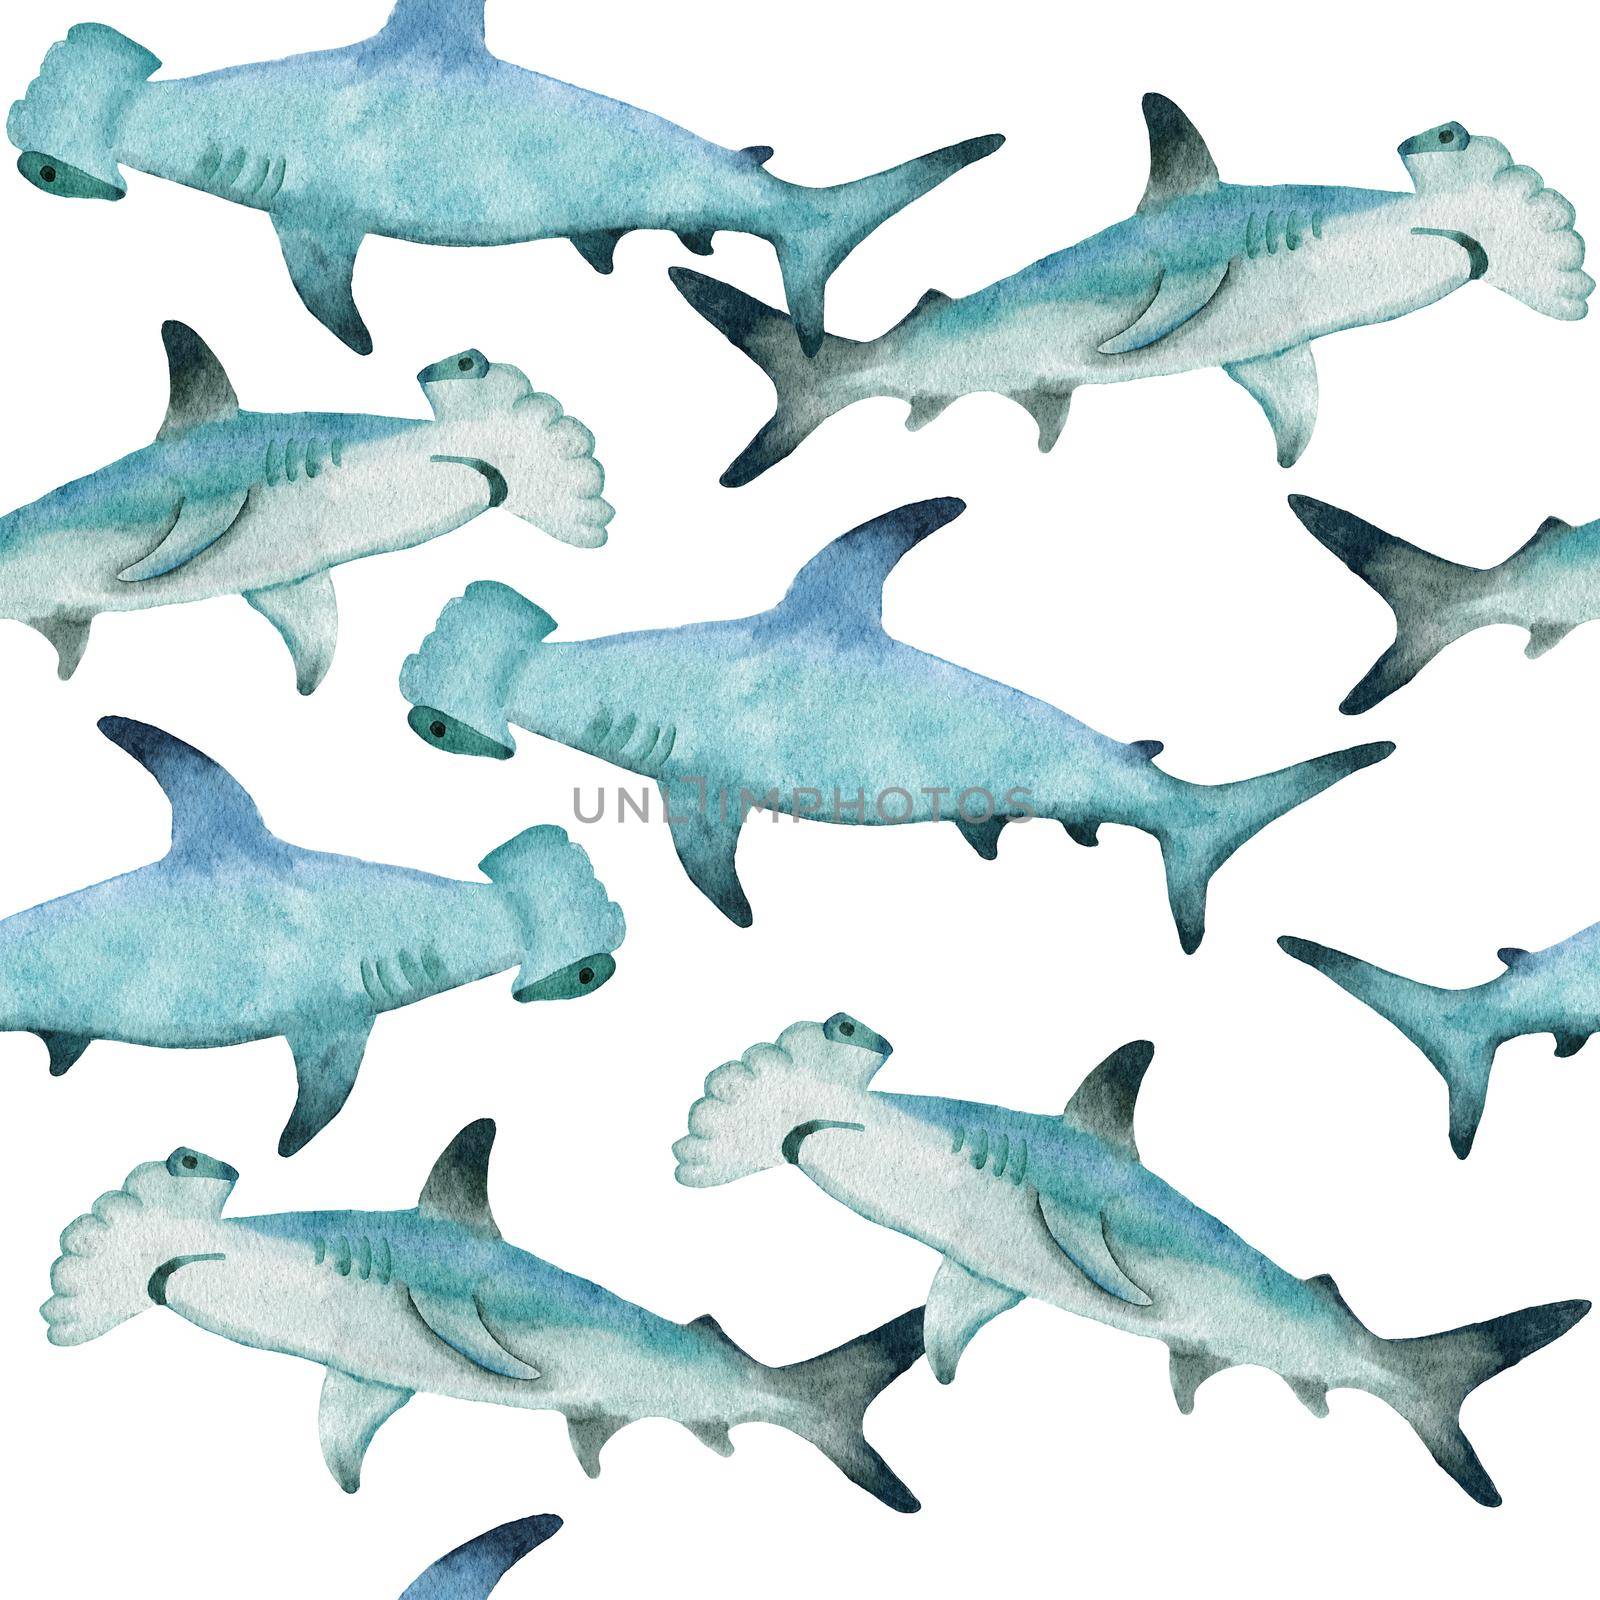 Hand drawn watercolor seamless pattern with hammerhead shark. Sea ocean marine animal, nautical underwater endangered mammal species. Blue gray illustration for fabric nursery decor, under the sea prints. by Lagmar